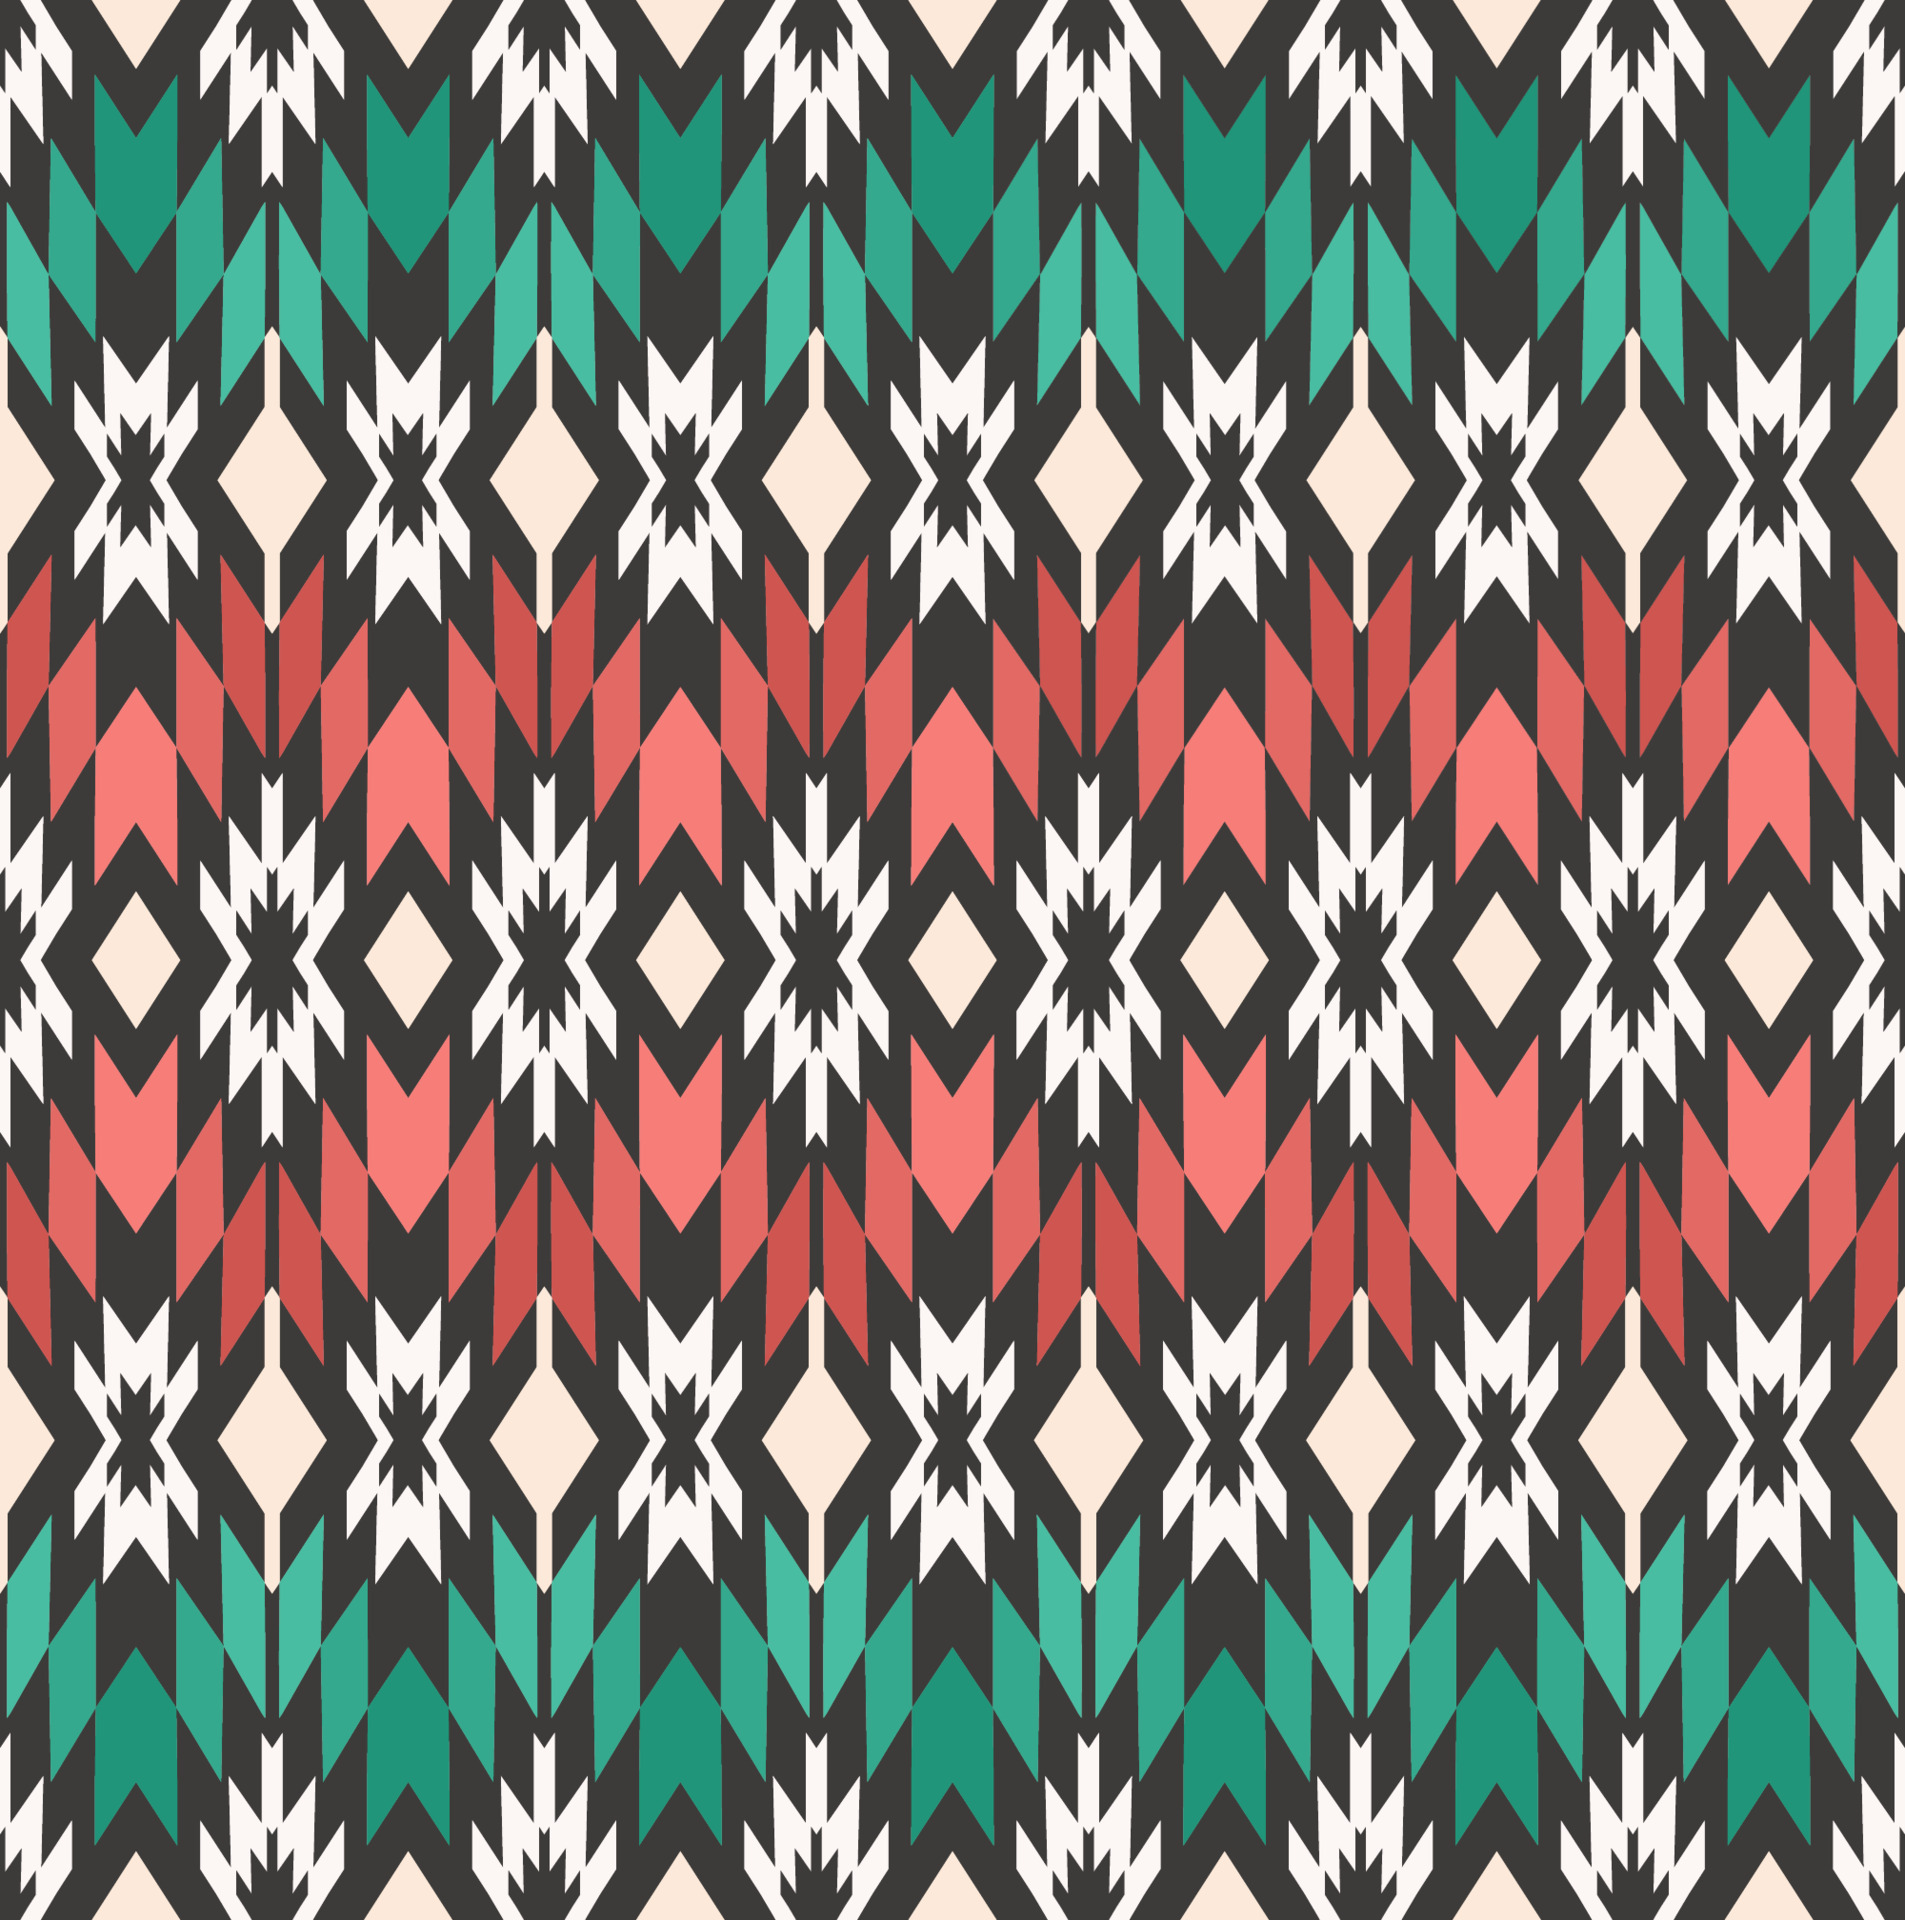 nativo azteca tribal apache chevron forma geométrica fondo transparente.  diseño étnico colorido patrón rojo-verde. uso para telas, textiles,  elementos de decoración de interiores, tapicería, envoltura. 7049327 Vector  en Vecteezy